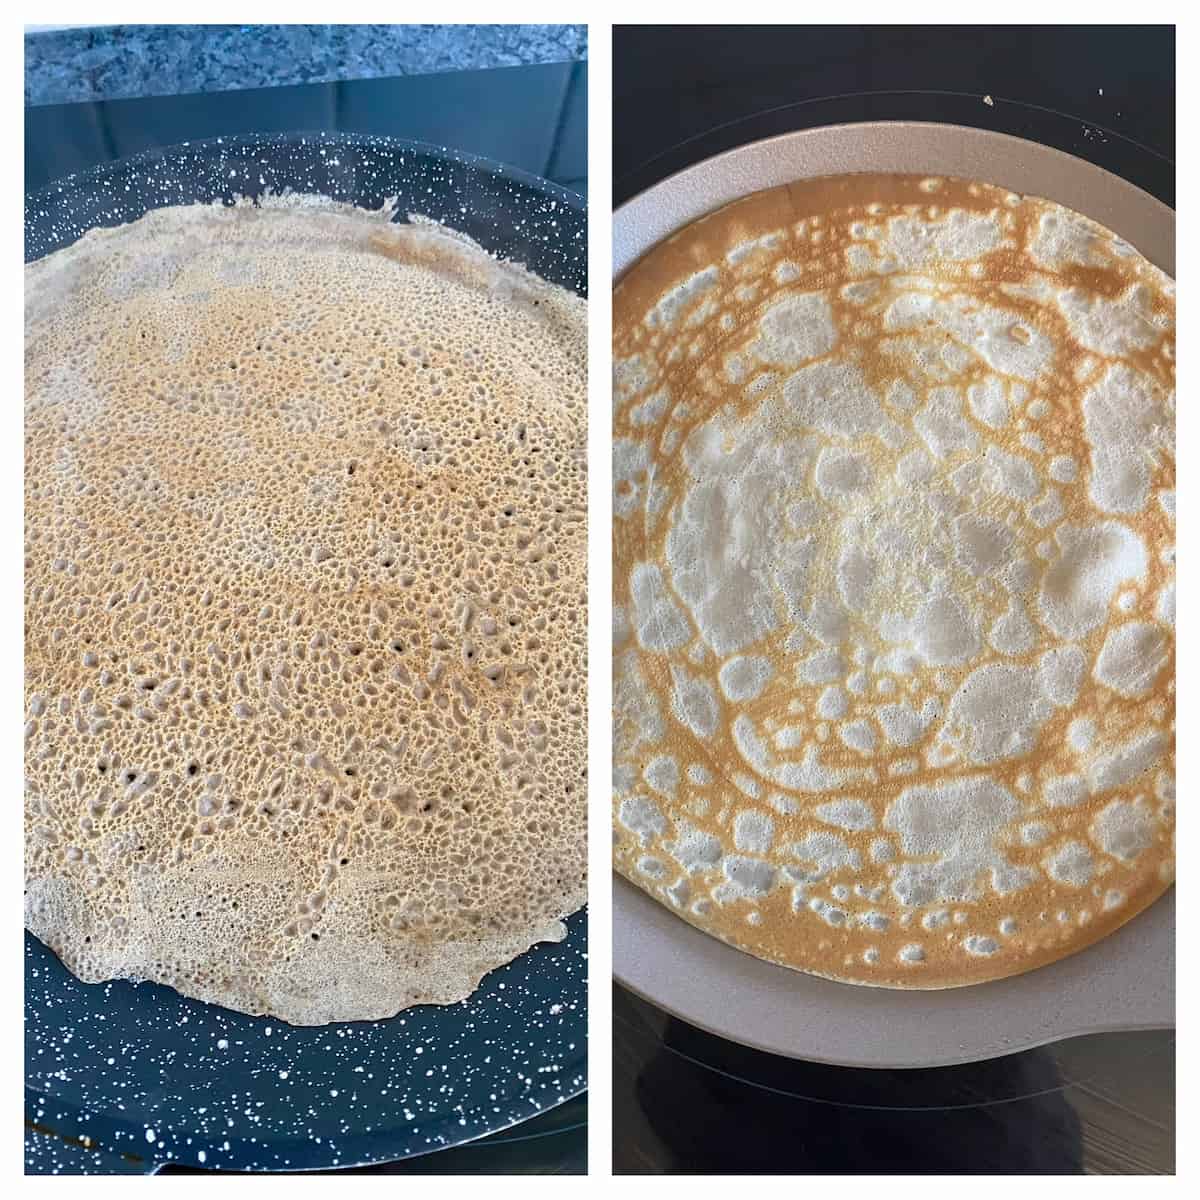 A savoury buckwheat galette and a sweet pancake crêpe